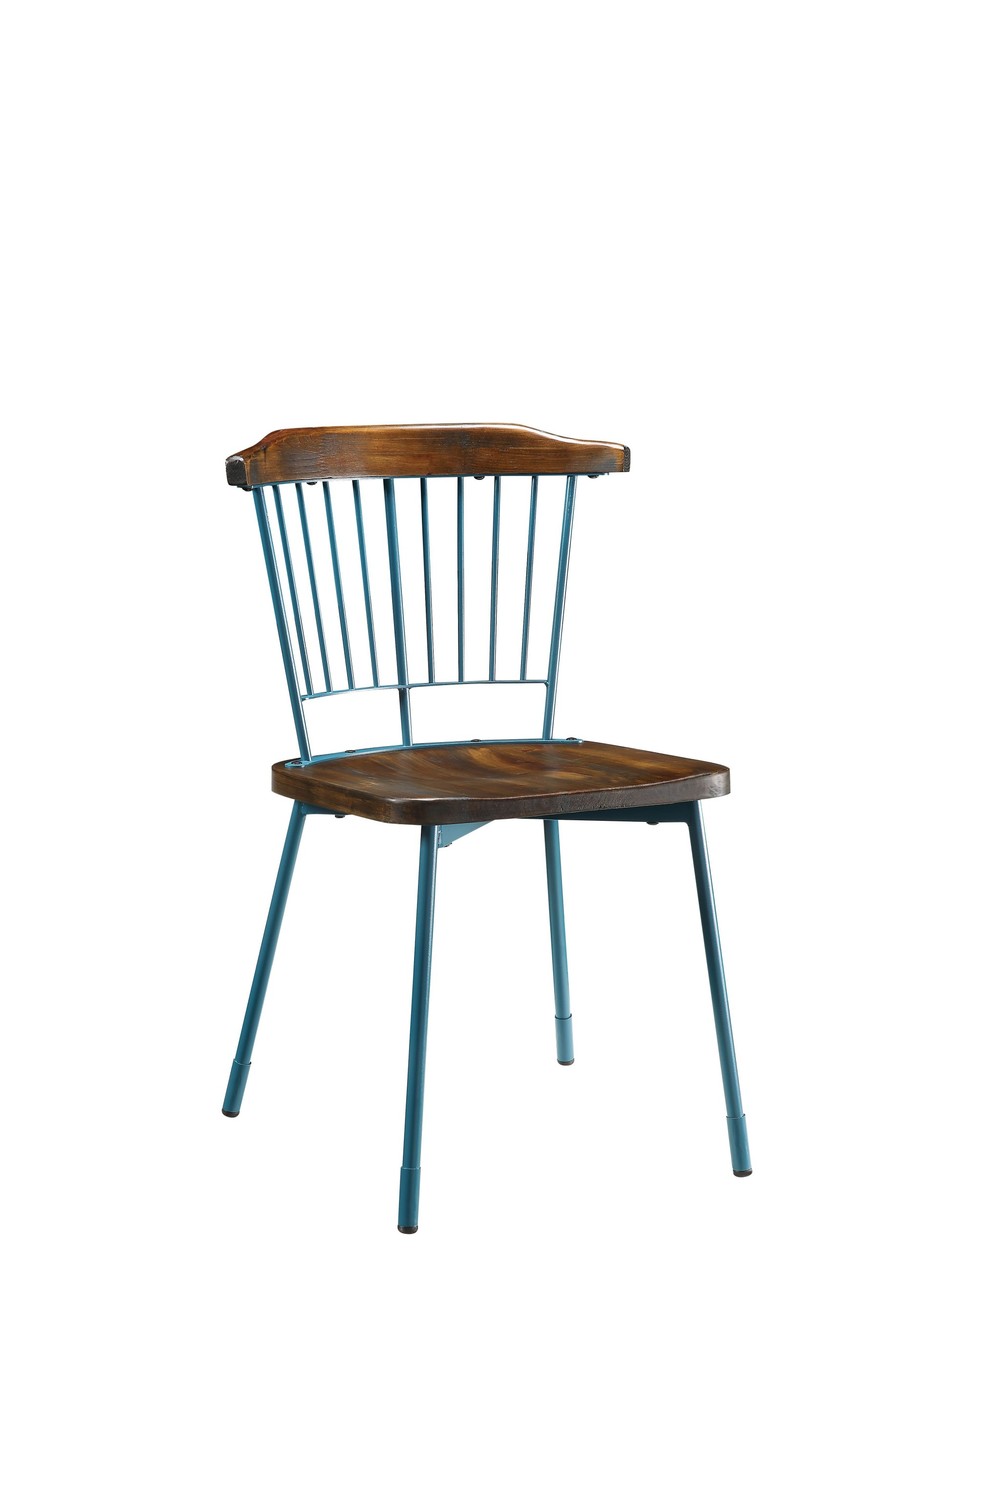 21" X 19" X 32" Brown Oak Wood and Teal Metal Side Chair Set of 2